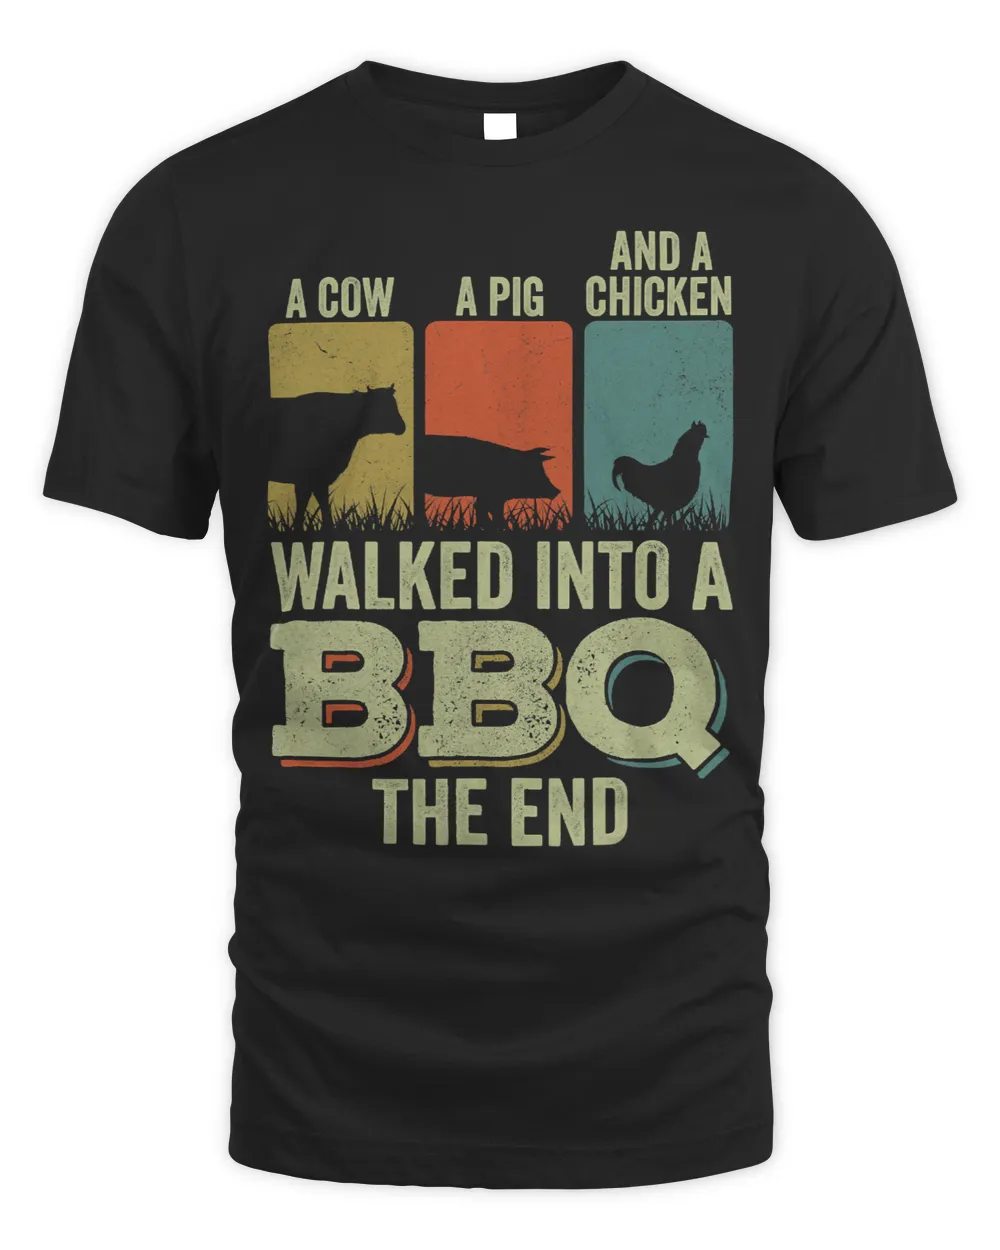 Pig BBQ Tee Shirts For Men Cow Pig Chicken Walked Into BBQ55 Piggy